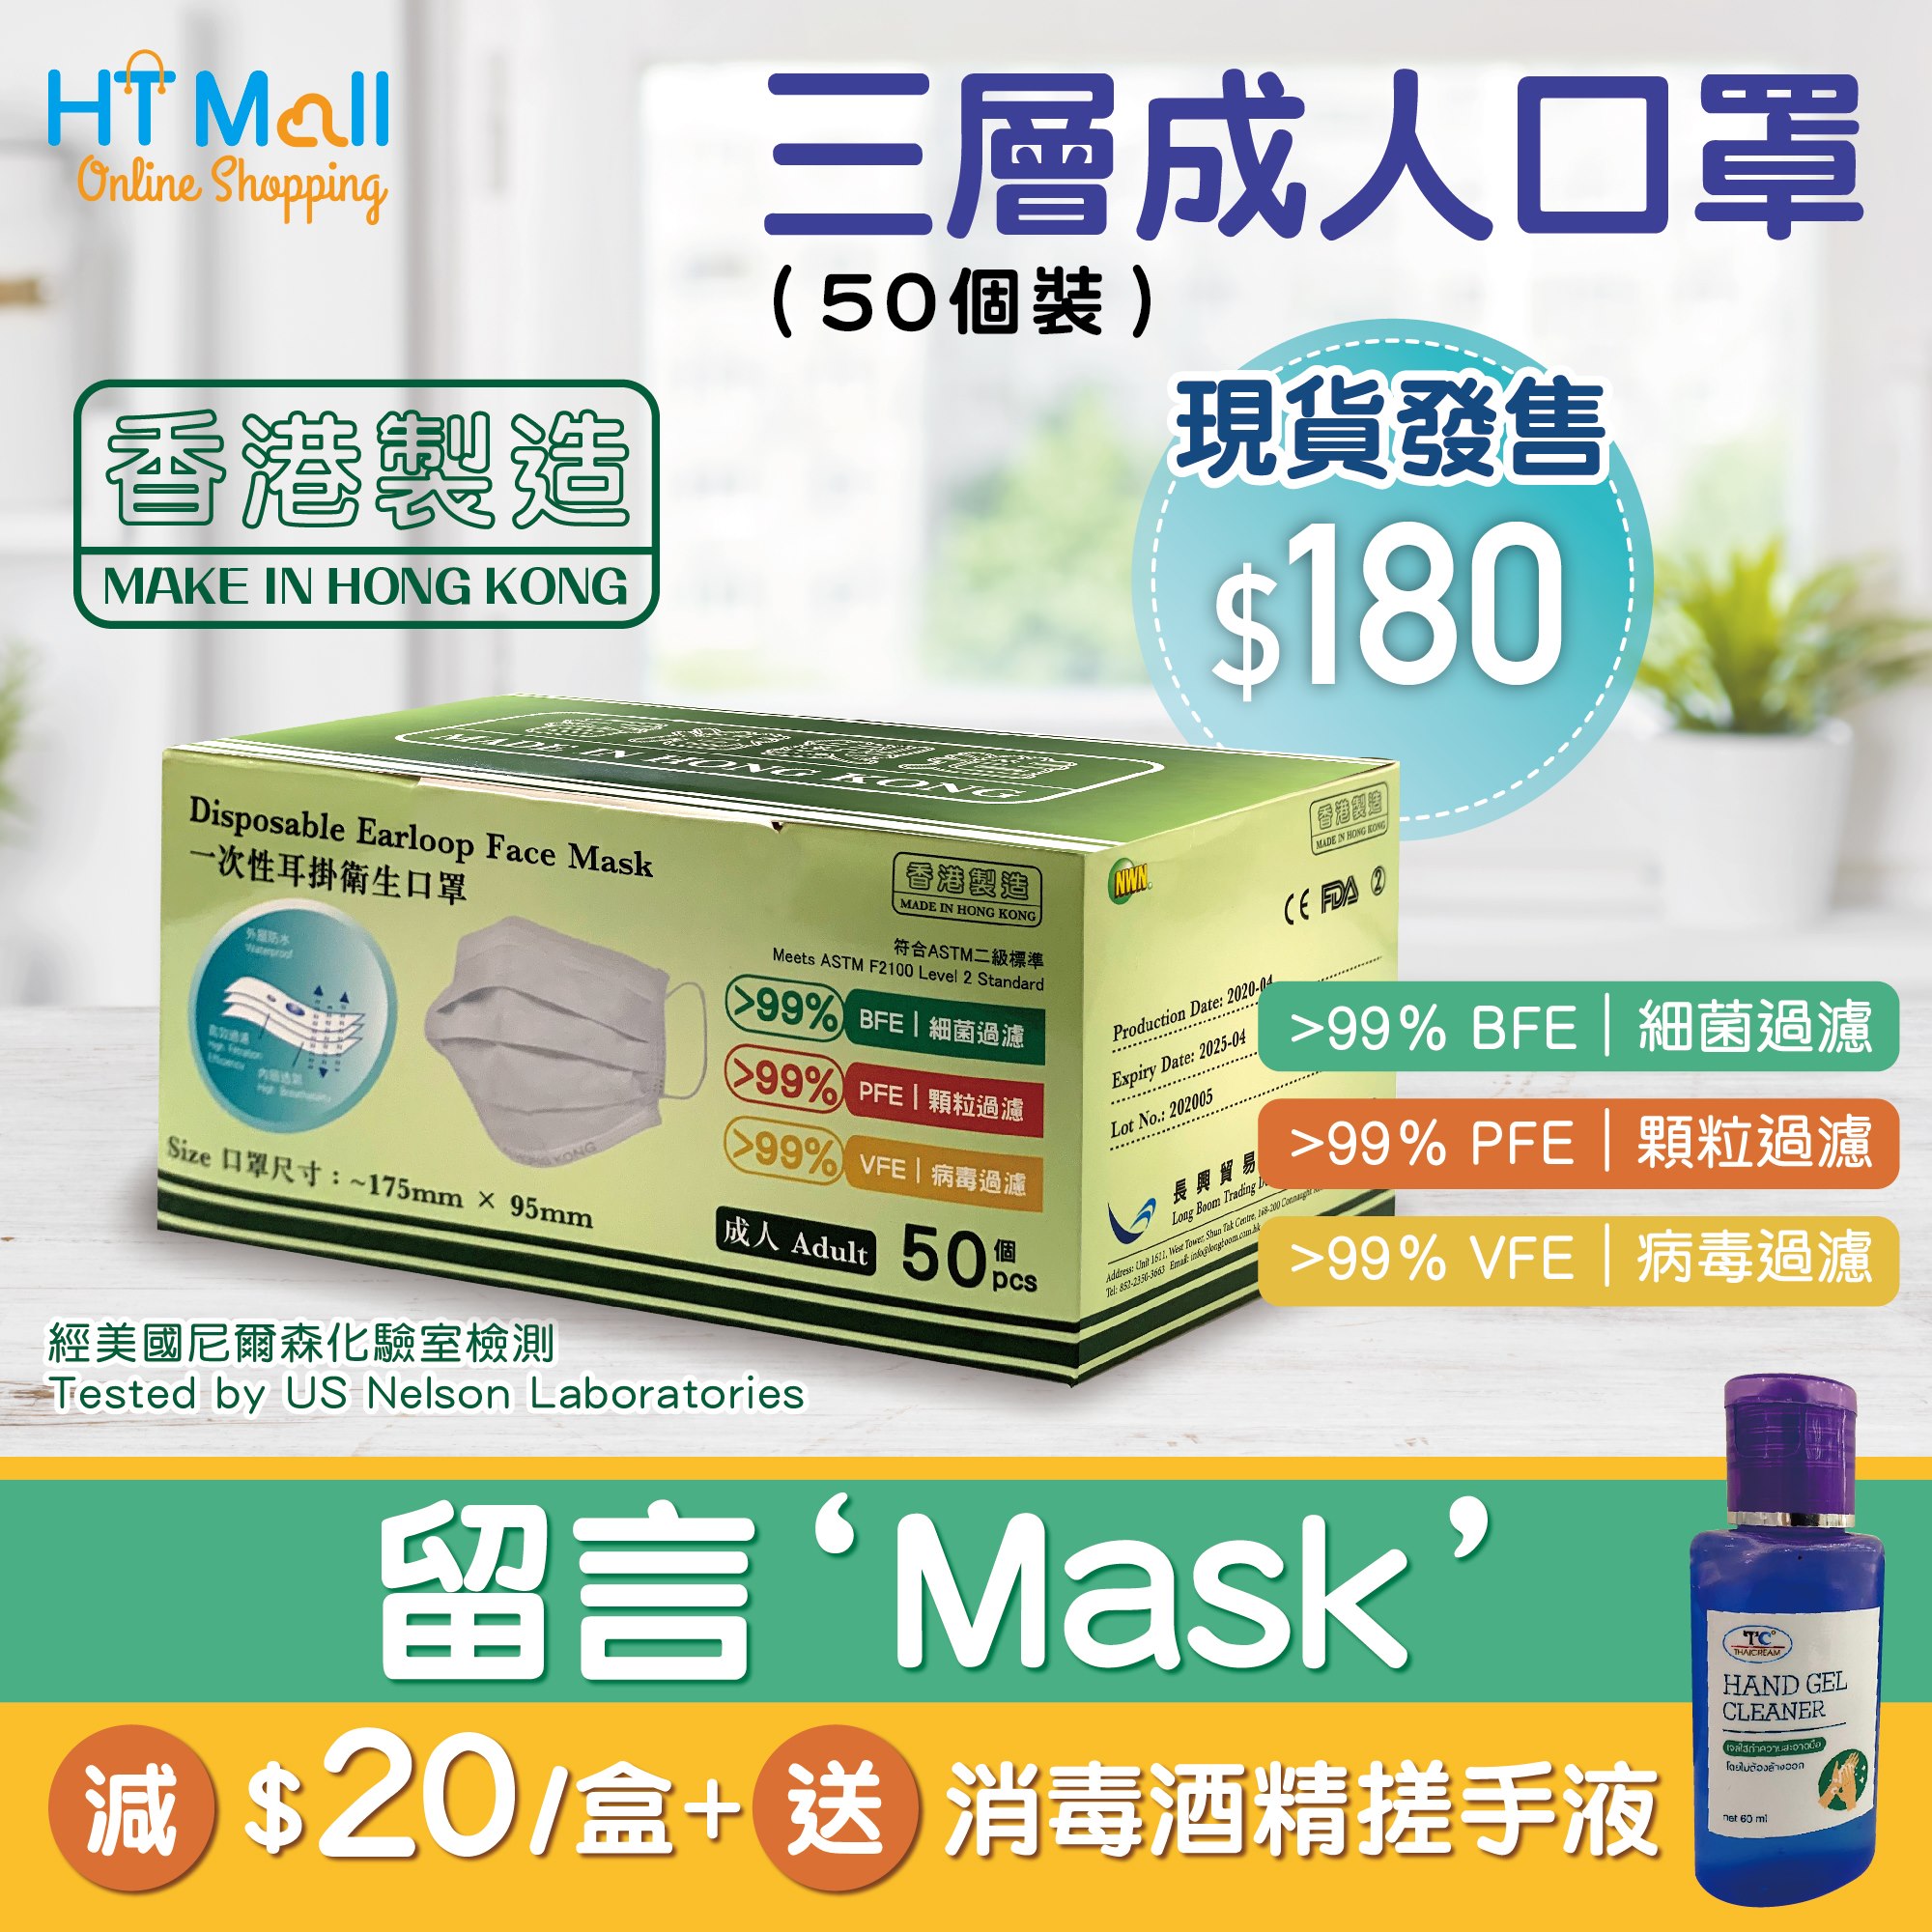 HTmall 香港製造 三層成人3防口罩 留言減$20 送消毒酒精搓手液